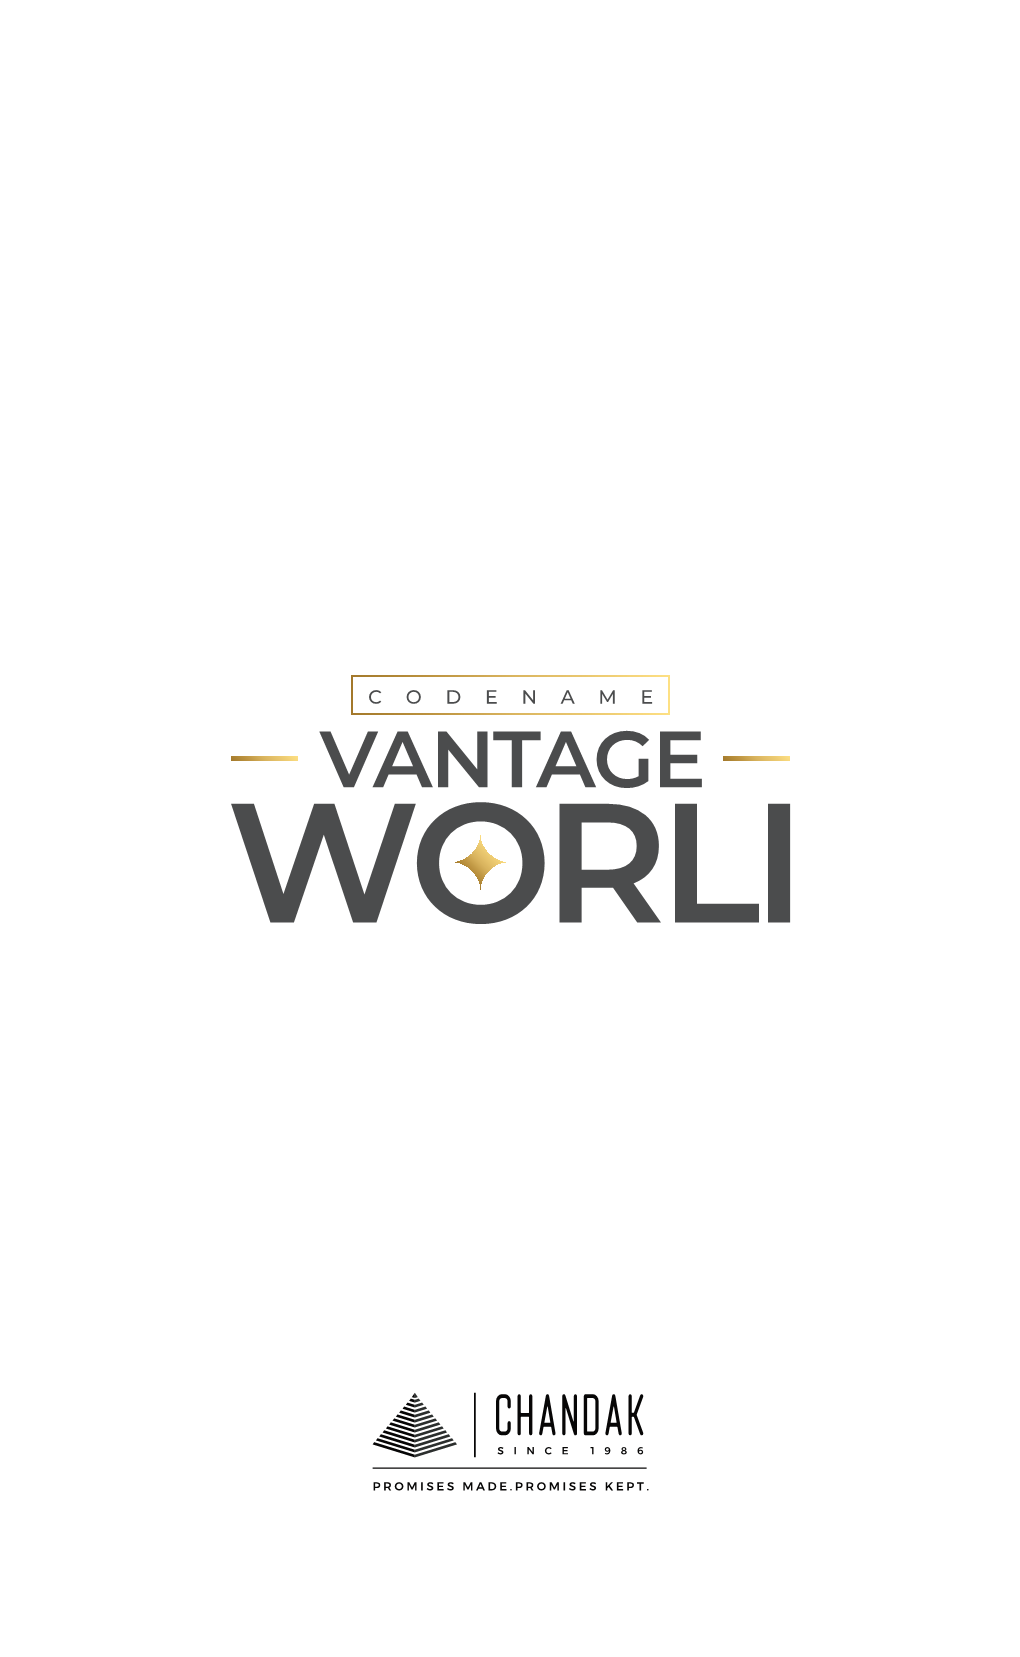 Vantage Worli Is Built on the Solid Foundation of Brilliant Ideas